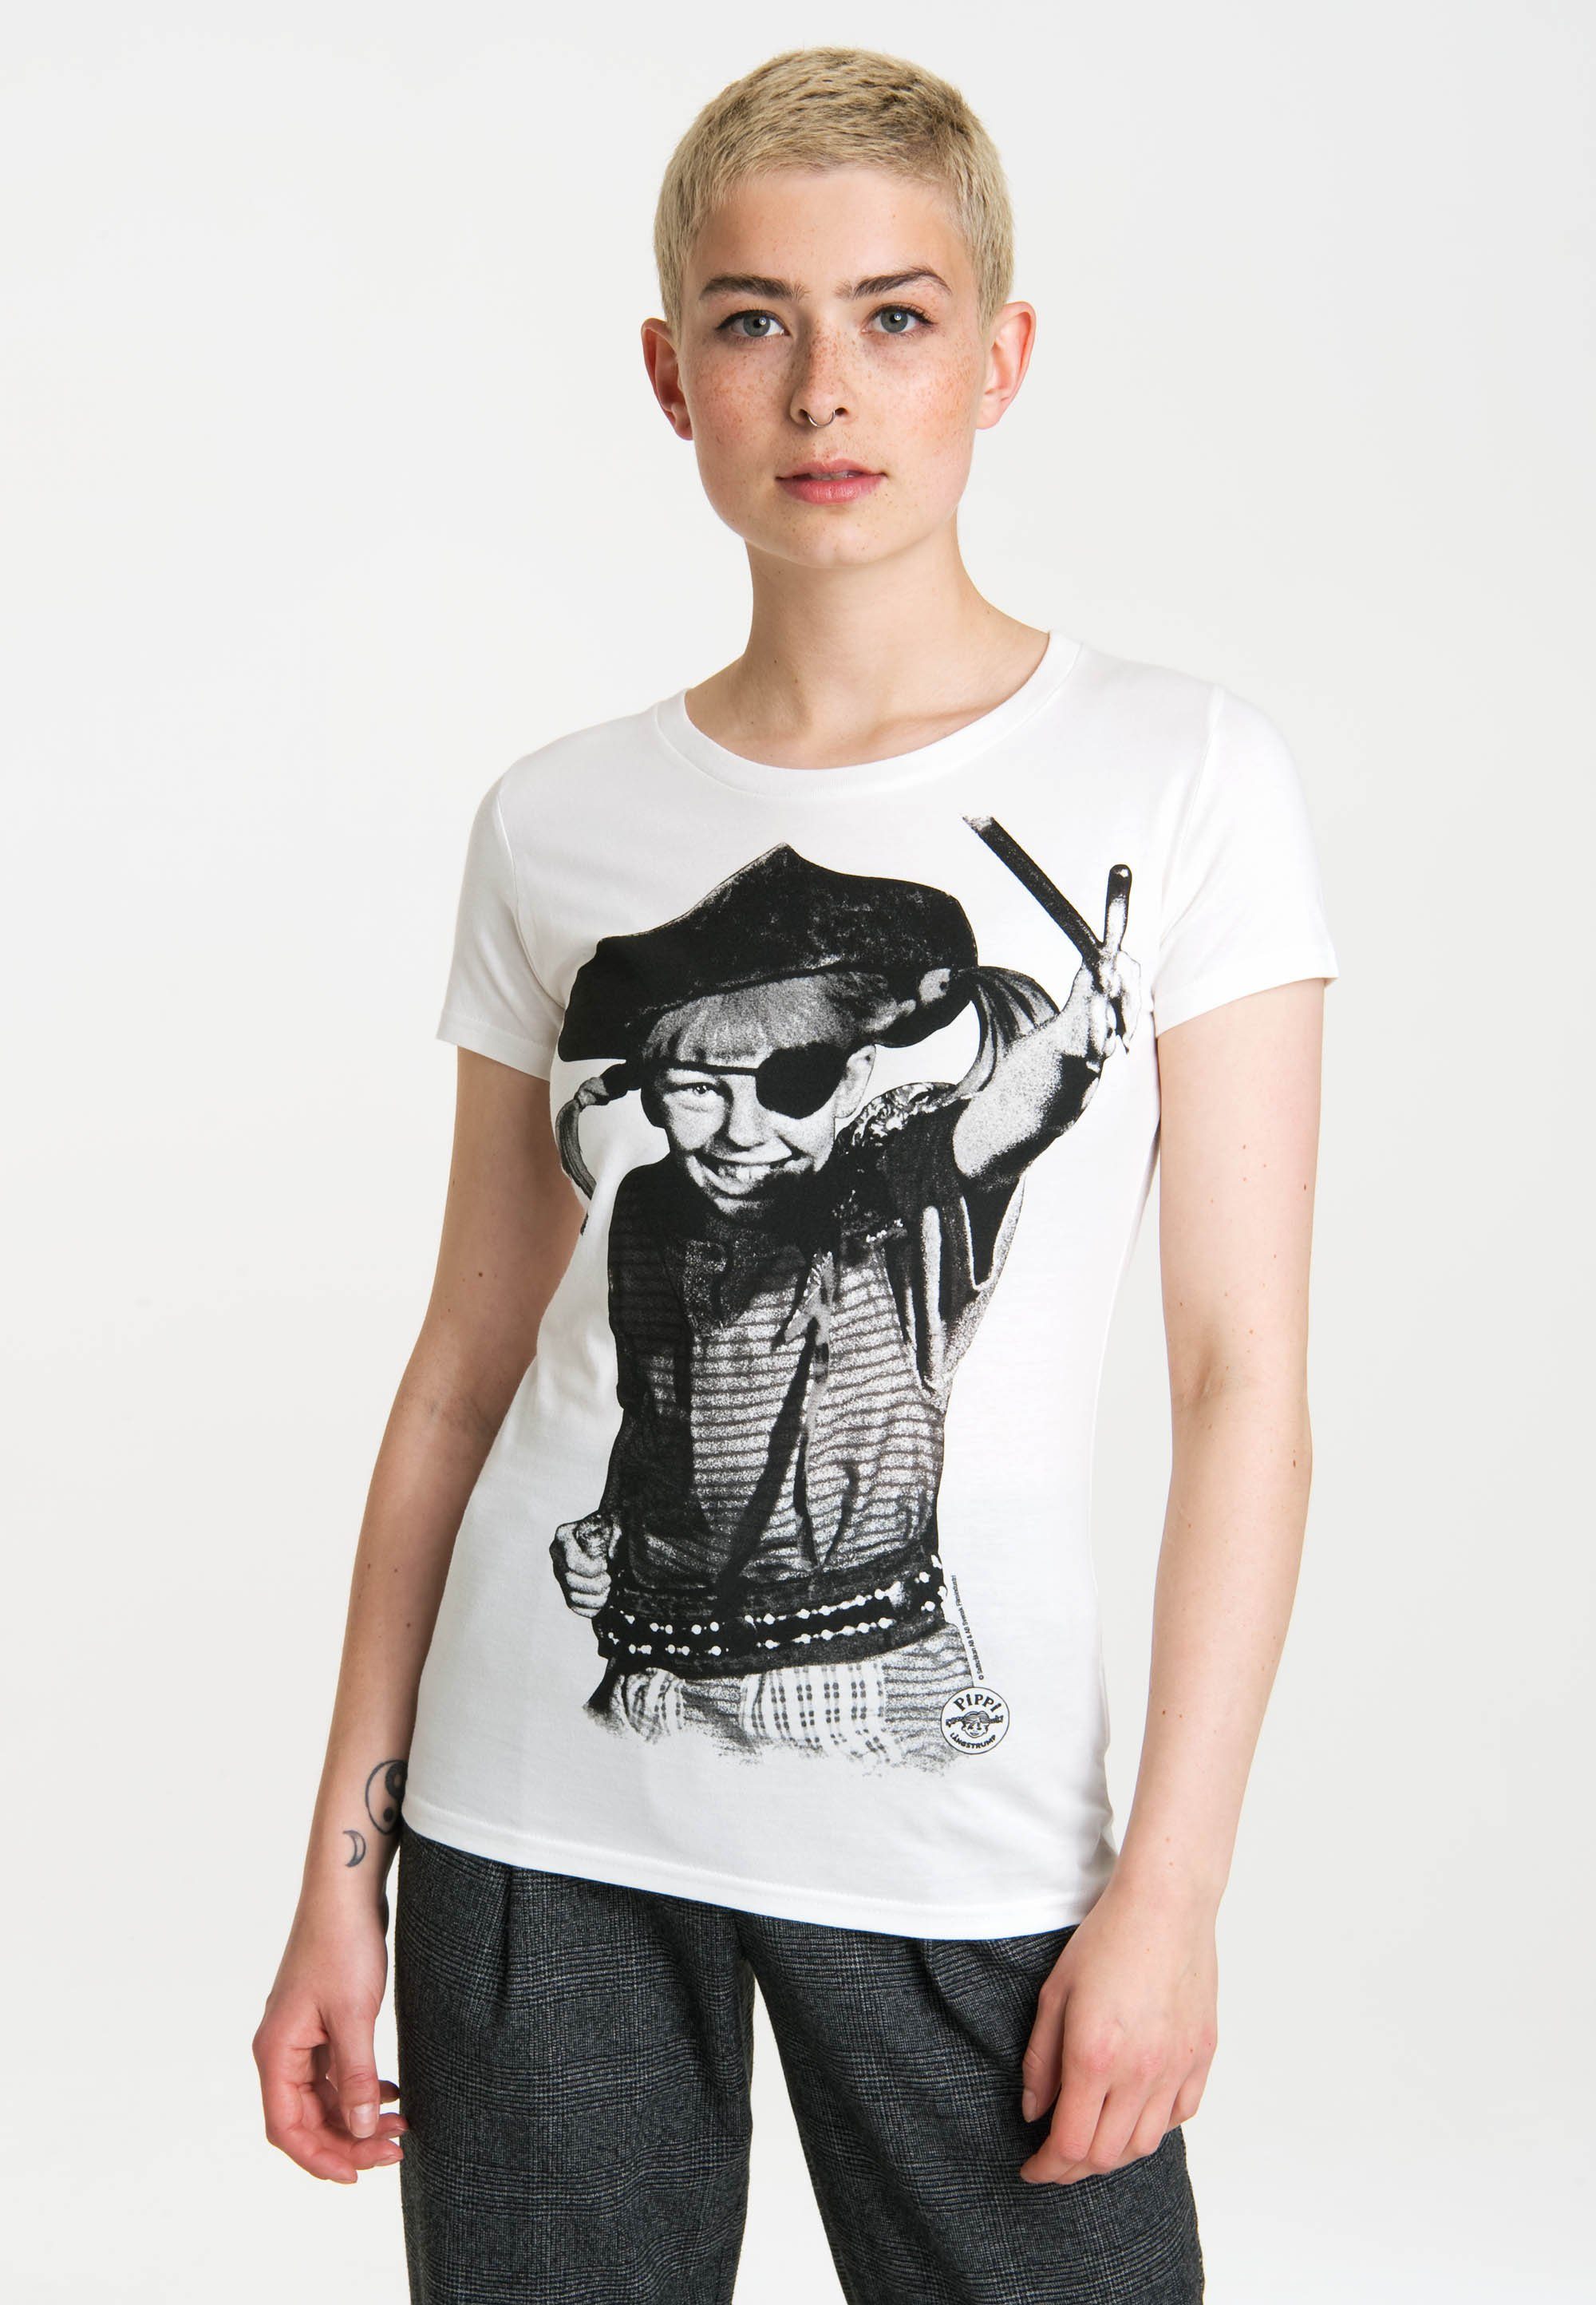 LOGOSHIRT T-Shirt Pippi - Pirat - Pirate - Pippi Langstrumpf mit niedlichem  Frontprint | T-Shirts